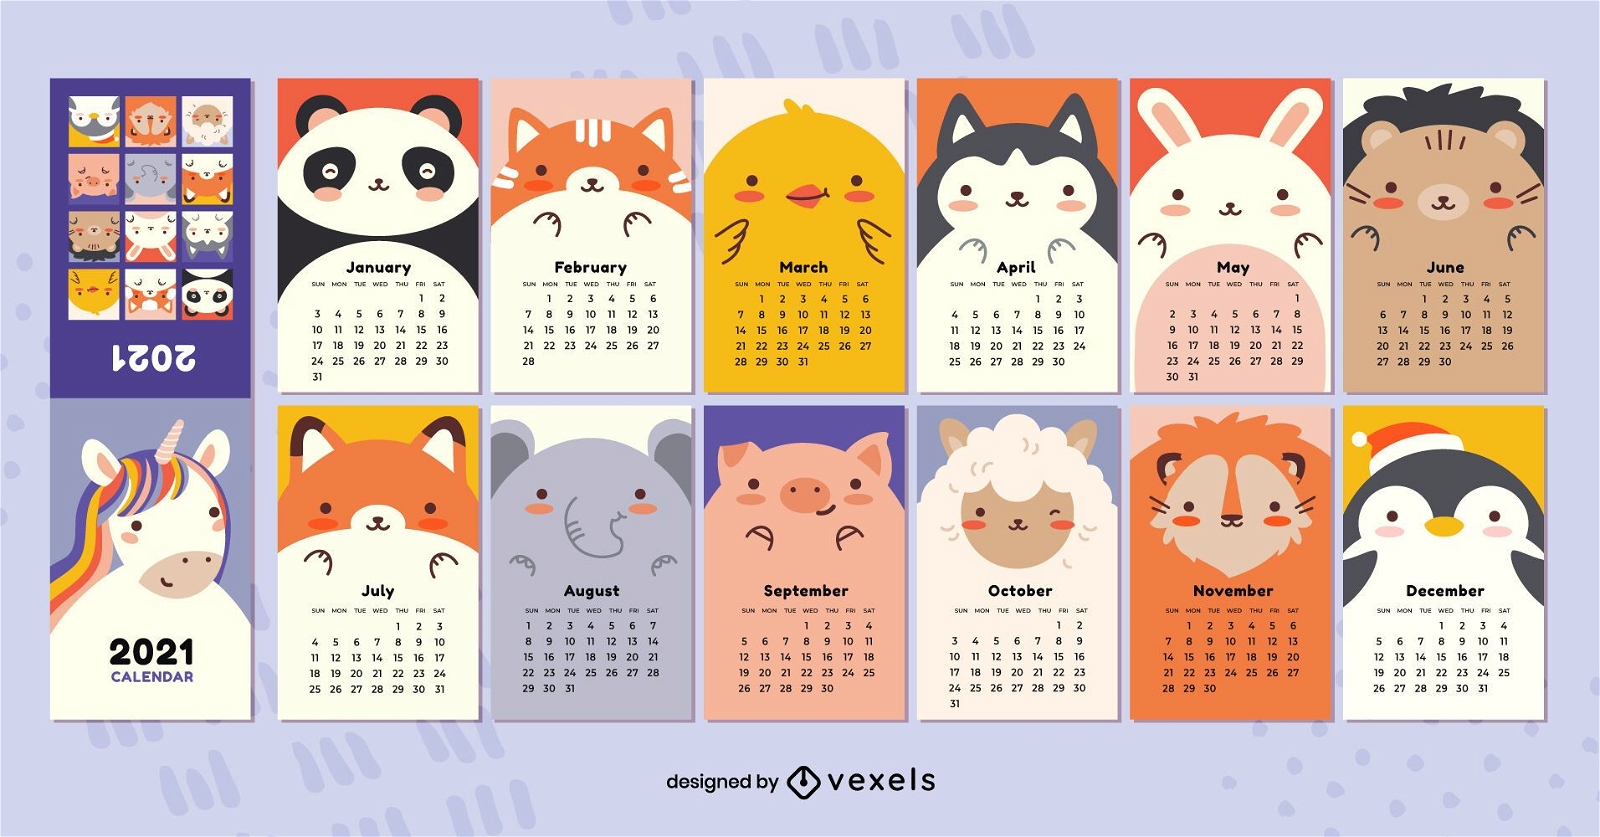 Calendario otaku 2021  Diseño de calendarios, Dibujos kawaii de animales,  Personajes de naruto